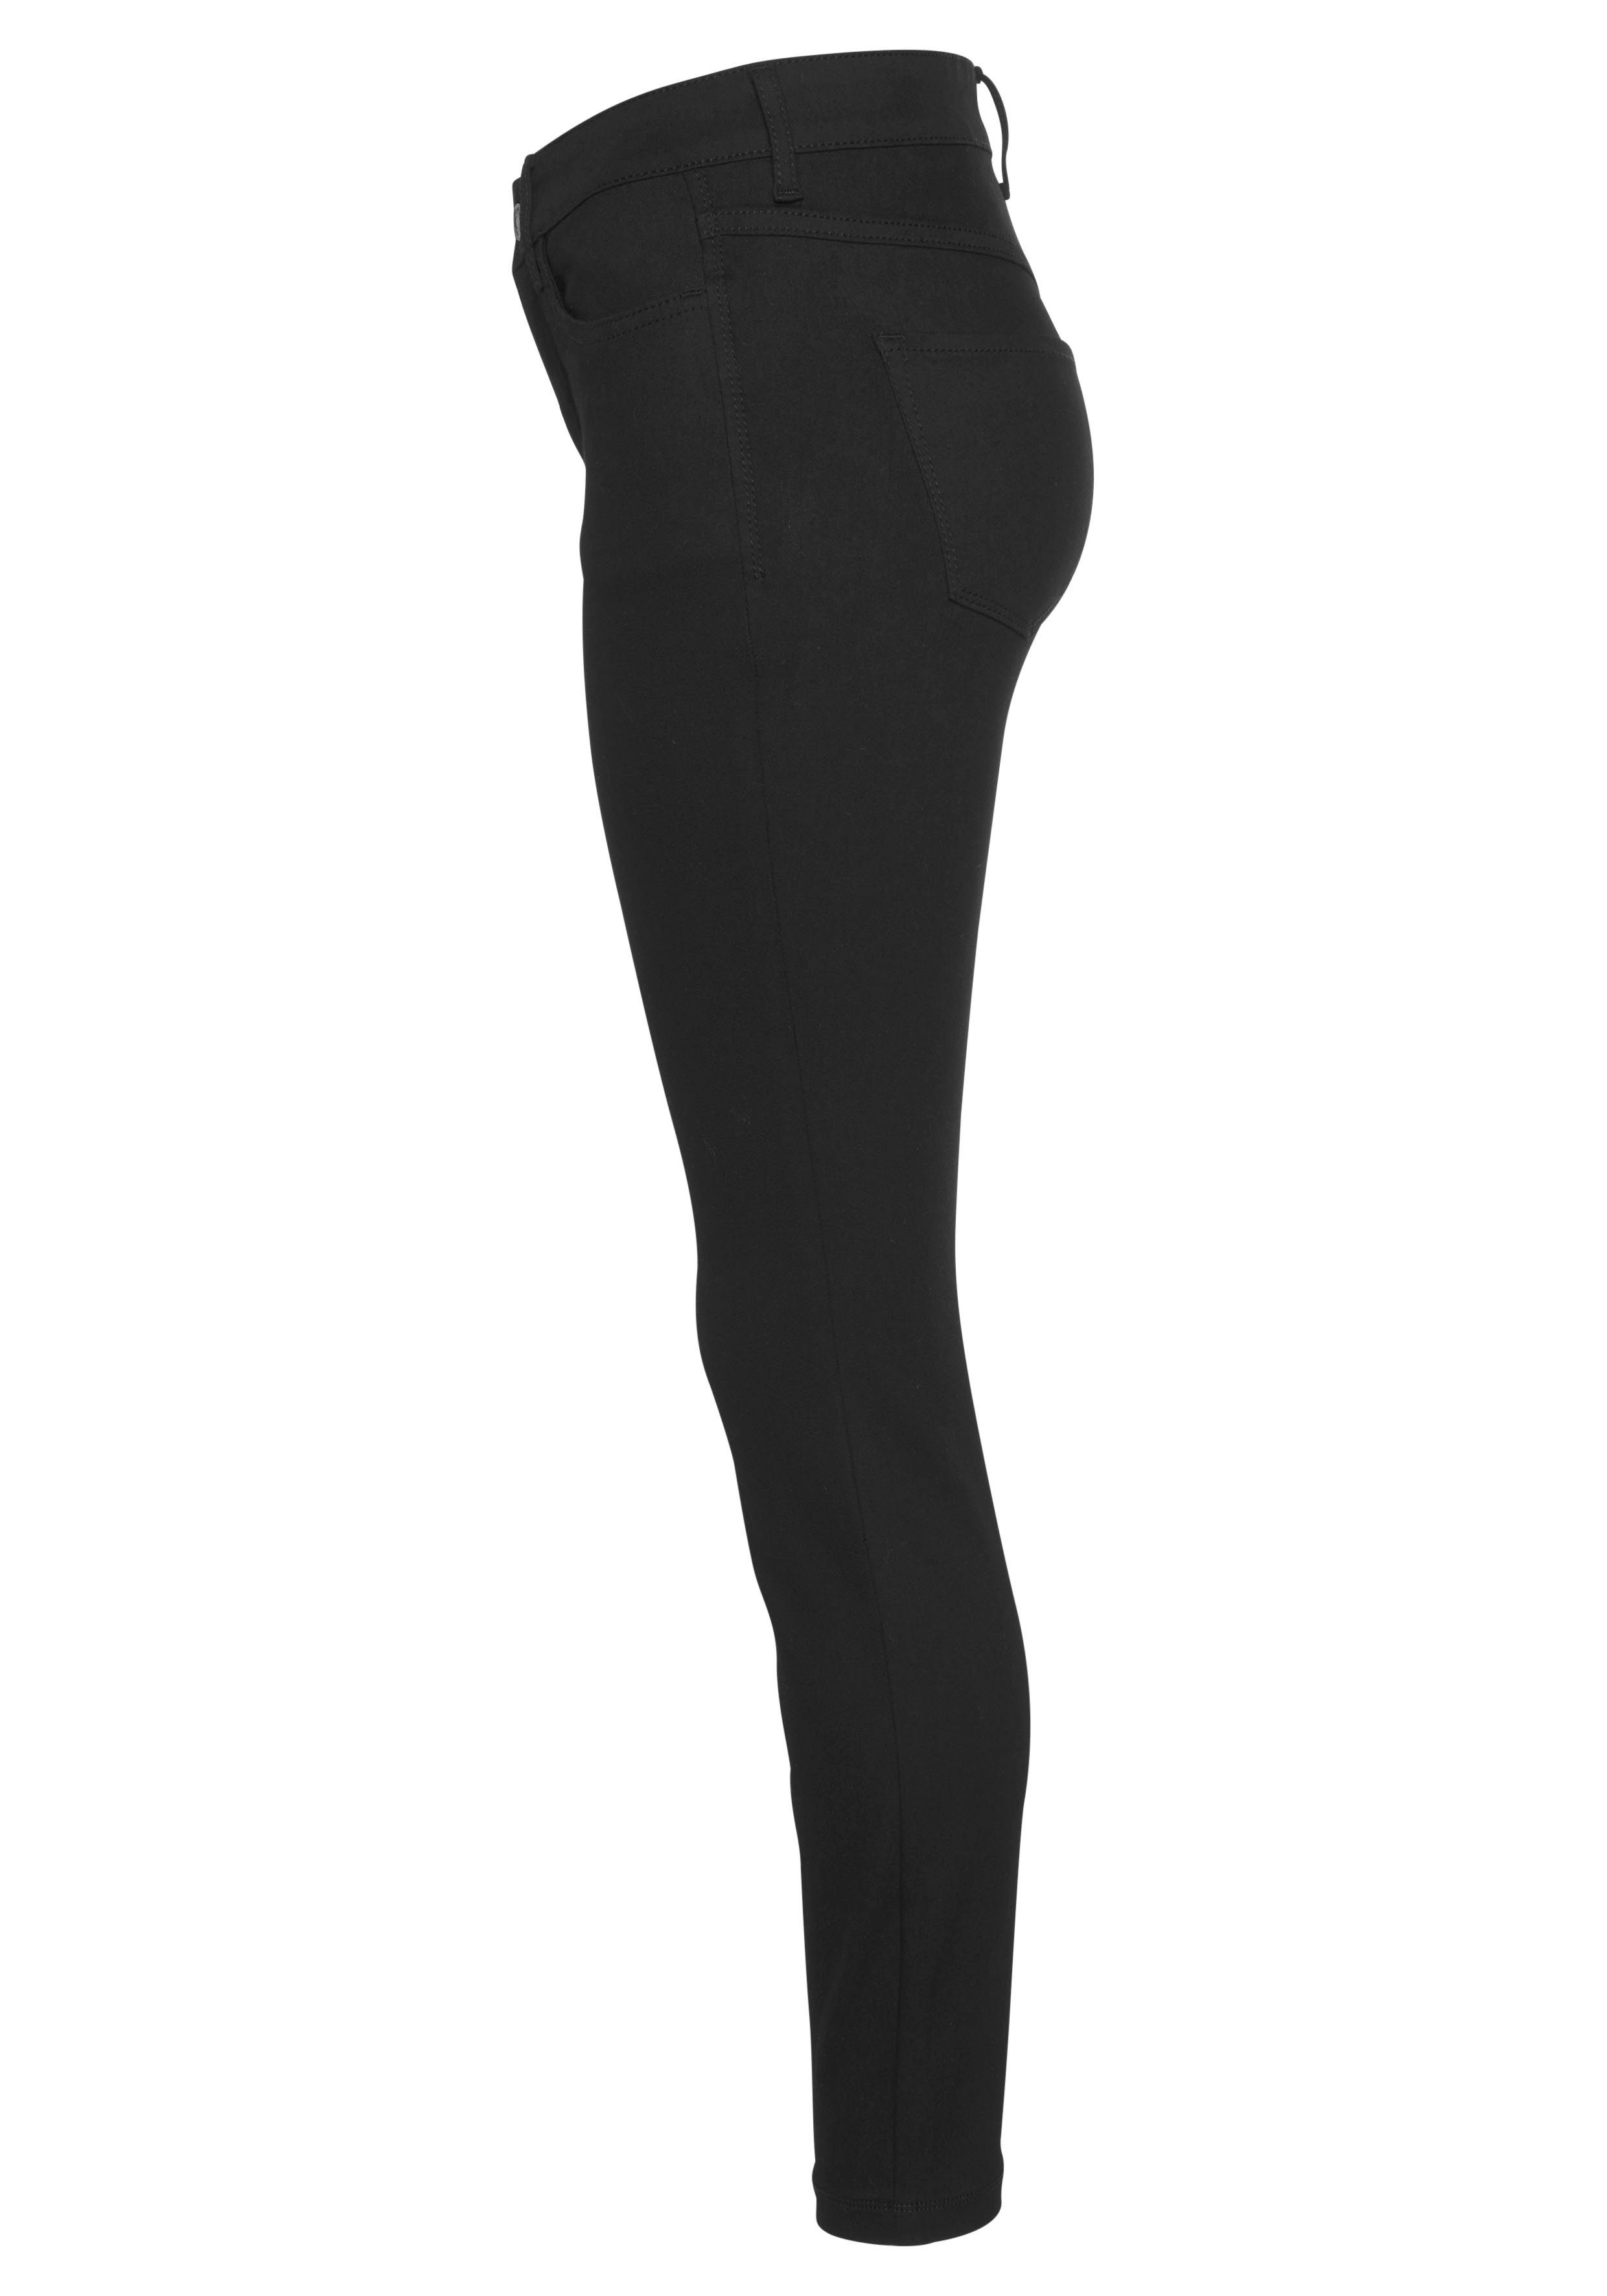 Qualität Tag Power-Stretch black-black ganzen bequem Skinny-fit-Jeans den sitzt MAC Hiperstretch-Skinny